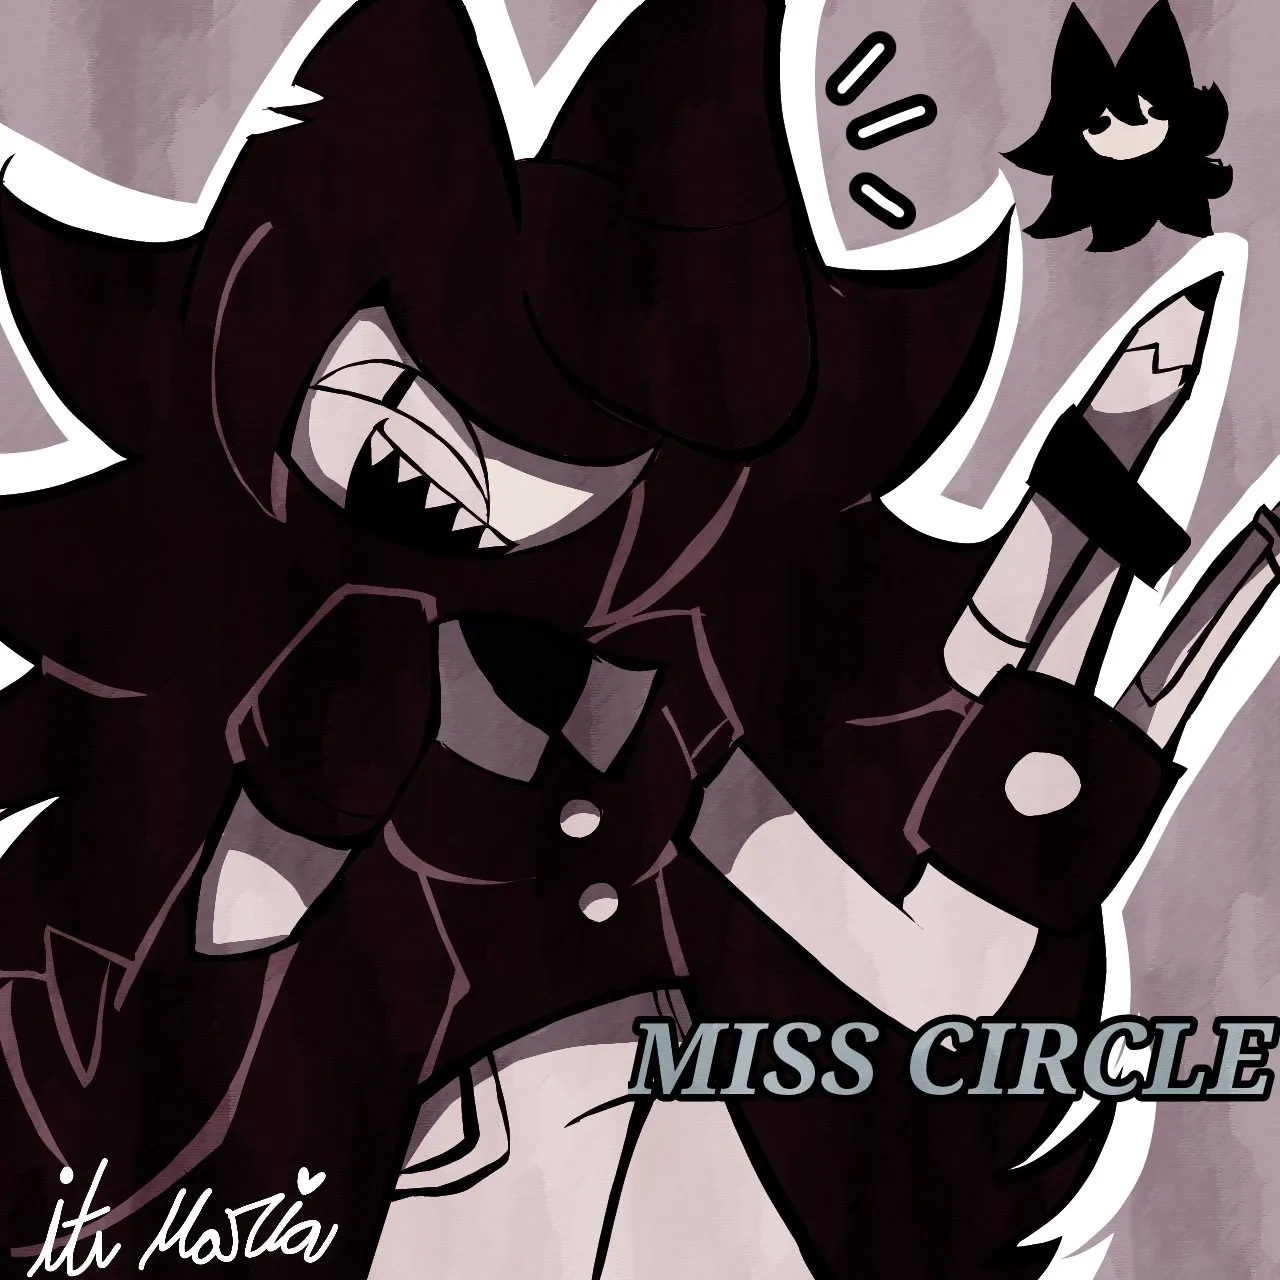 Avatar of Miss Circle